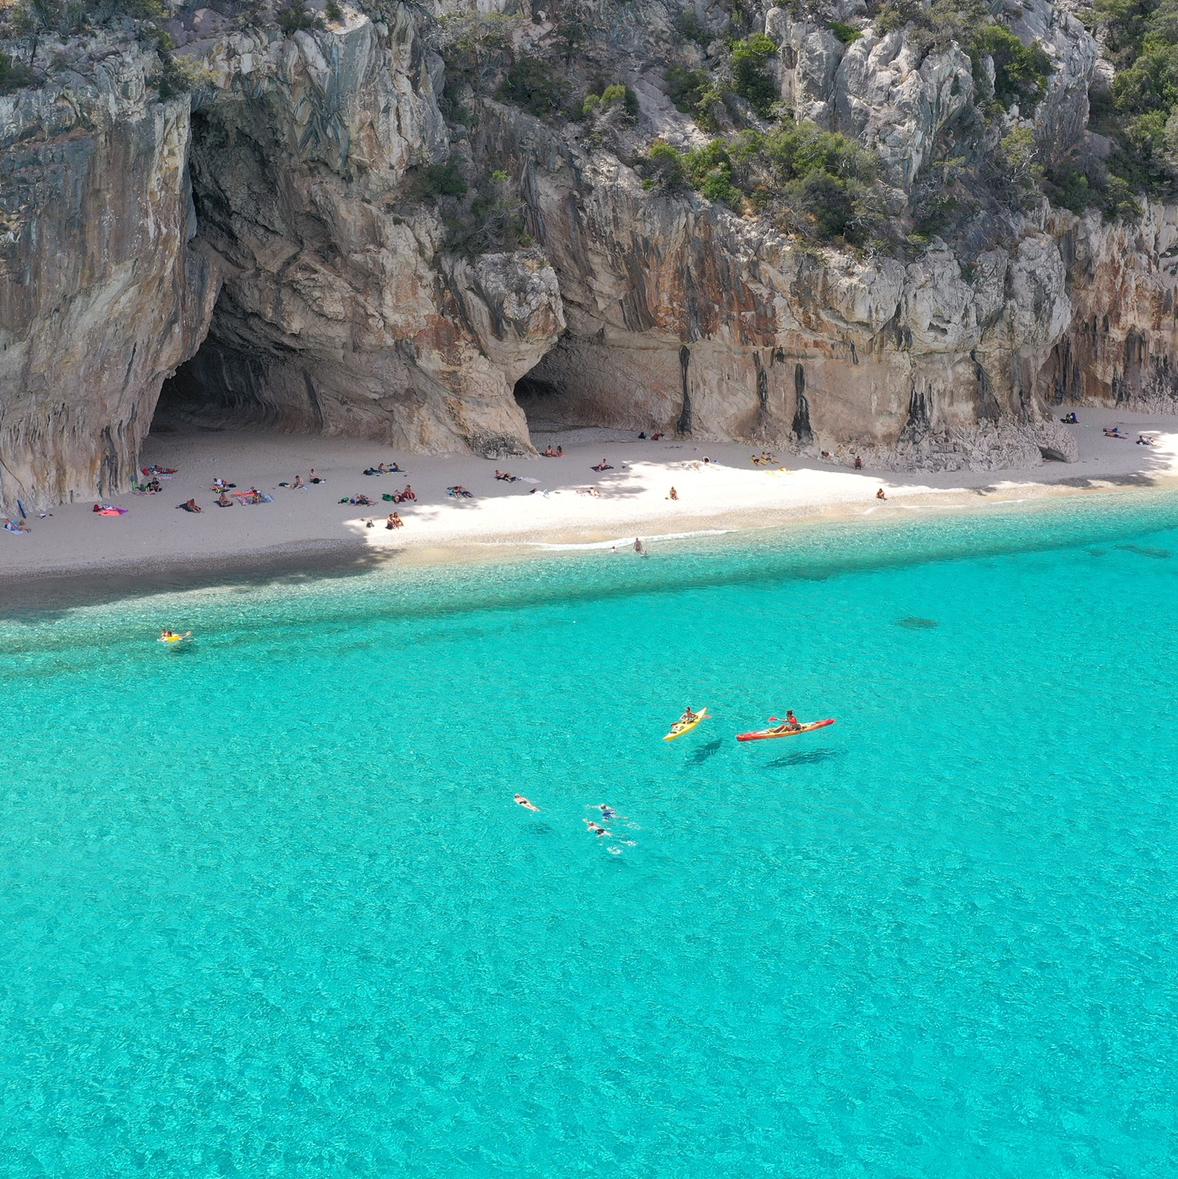 Sardinia's images